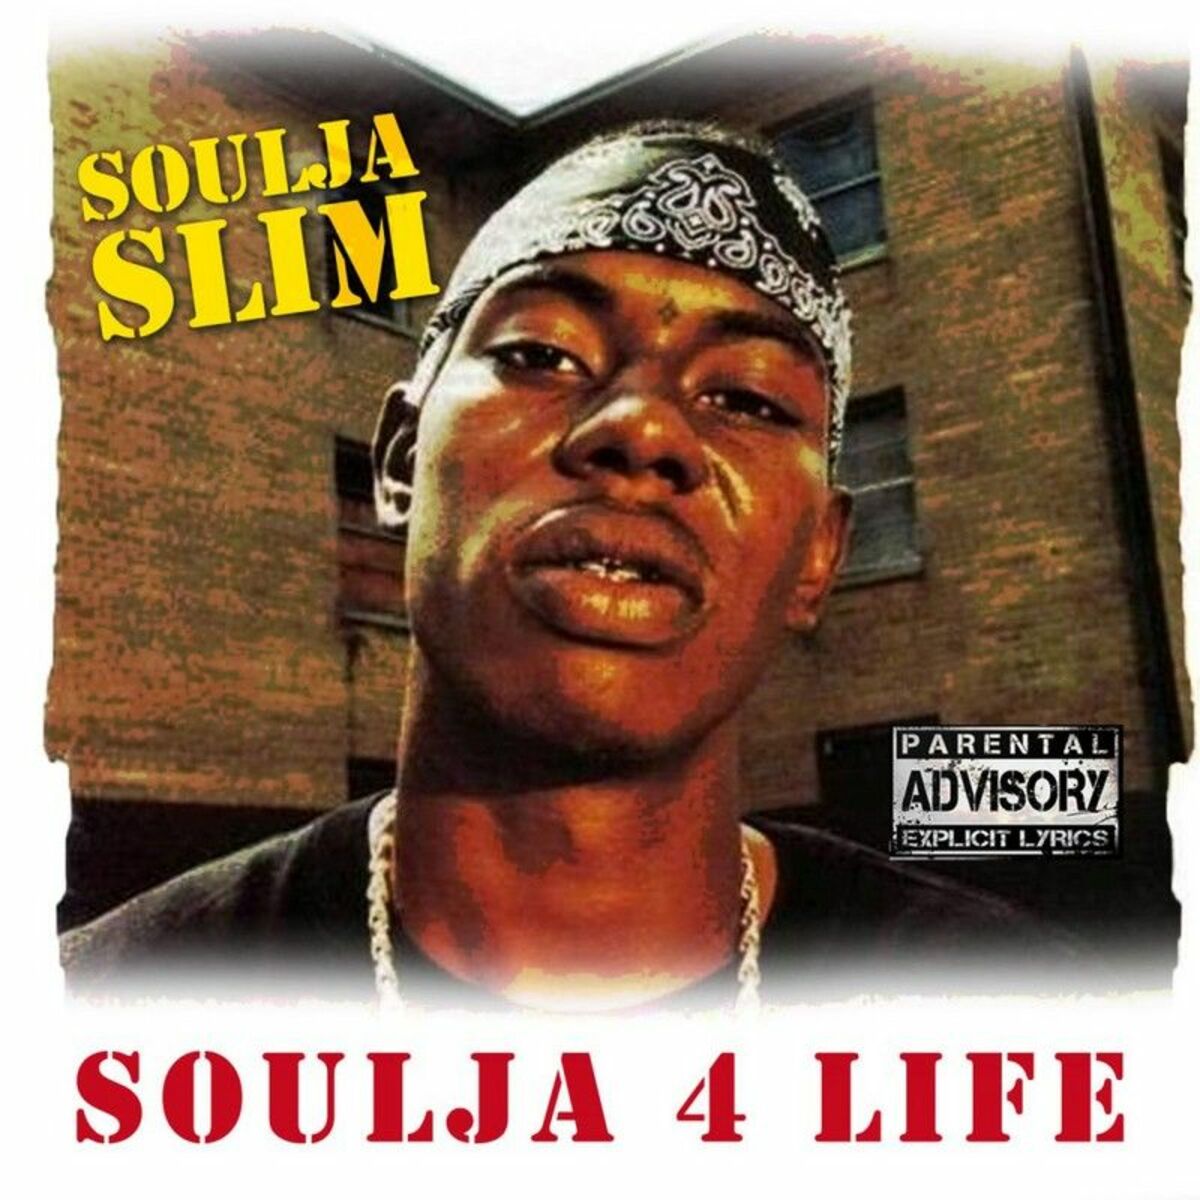 Soulja Slim: albums, songs, playlists | Listen on Deezer